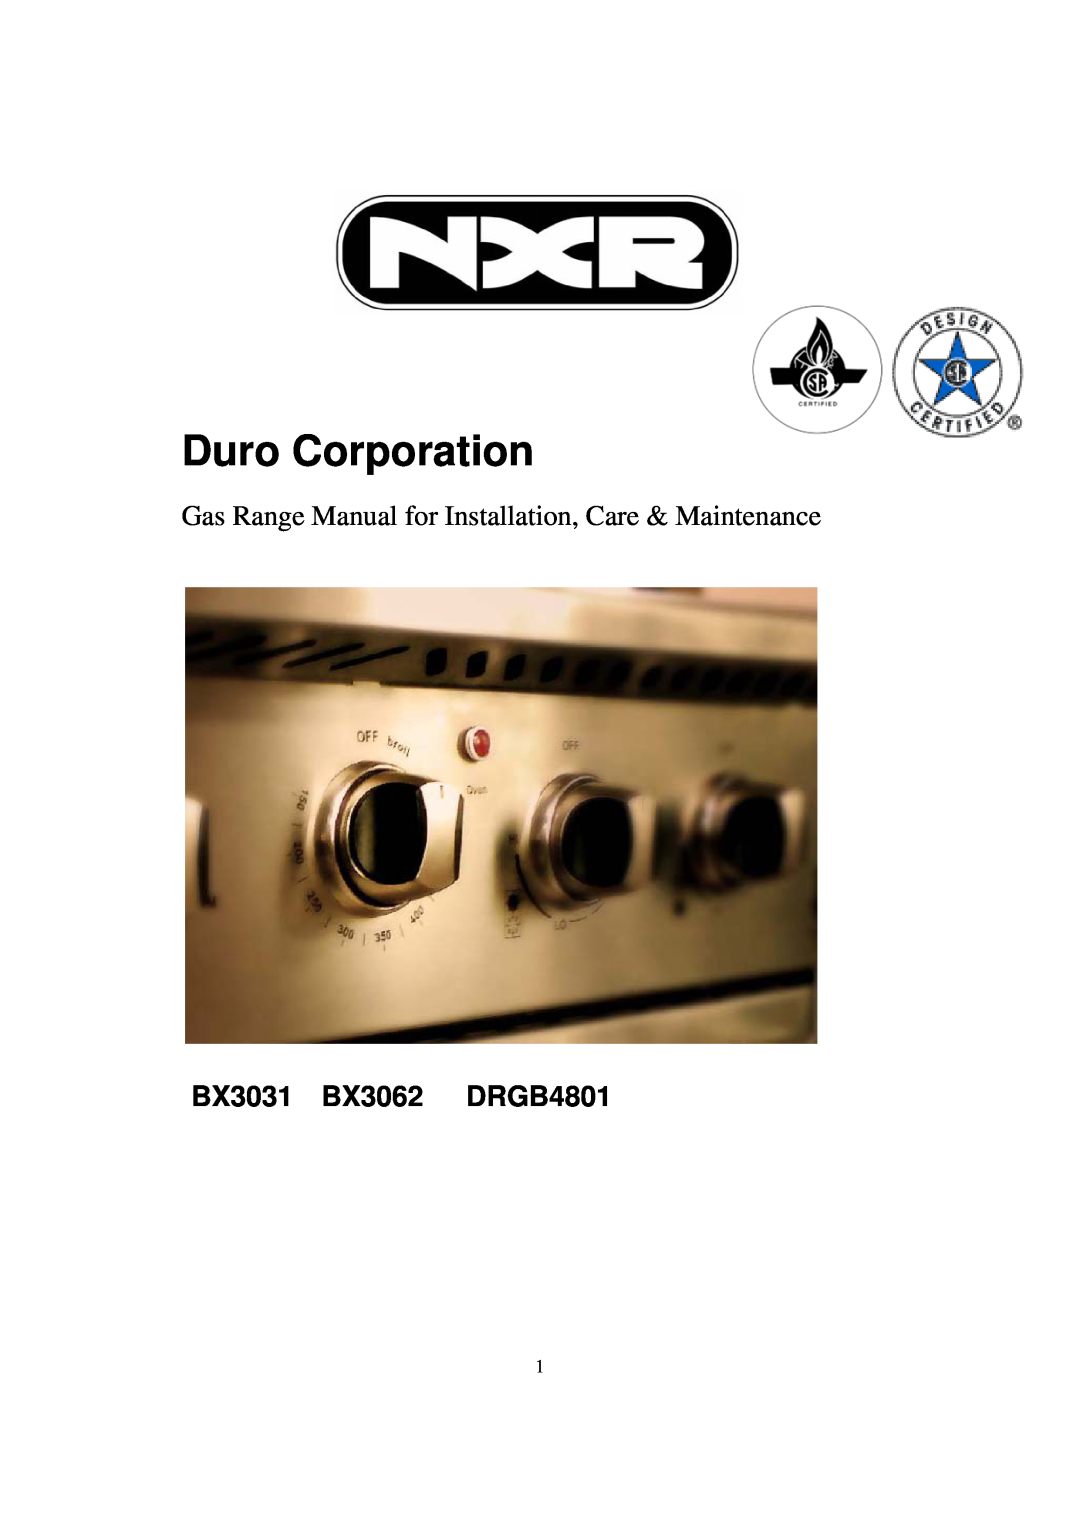 NXR manual BX3031 BX3062 DRGB4801, Duro Corporation, Gas Range Manual for Installation, Care & Maintenance 